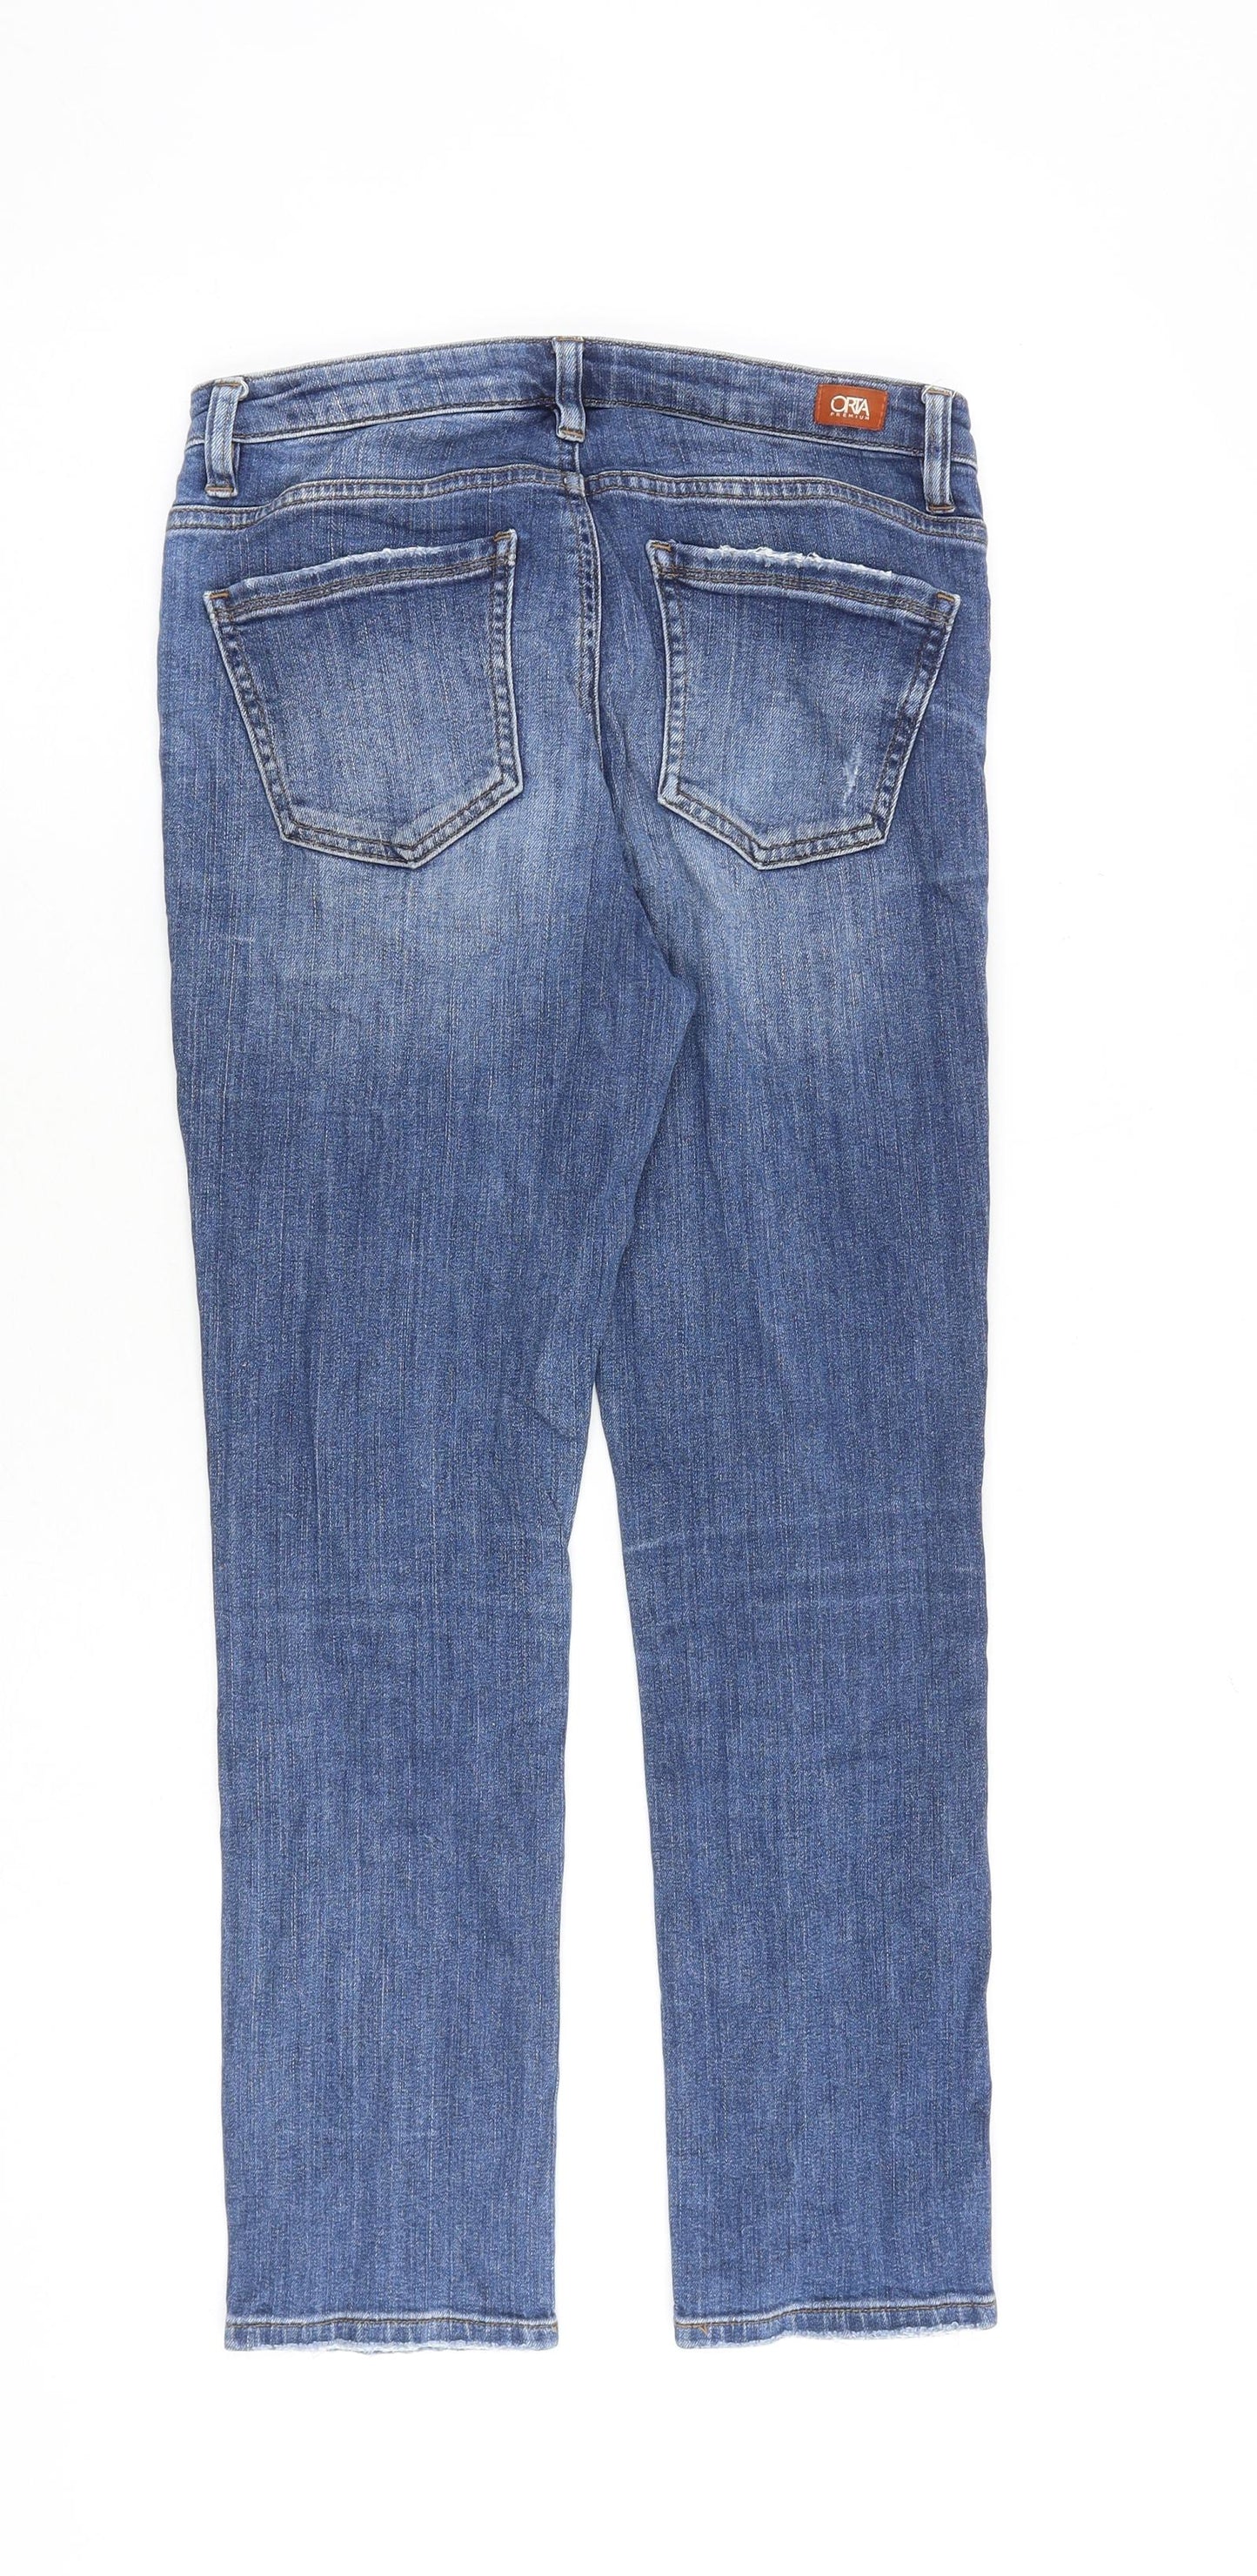 AH Denim Womens Blue Cotton Straight Jeans Size 28 in L26 in Regular Zip